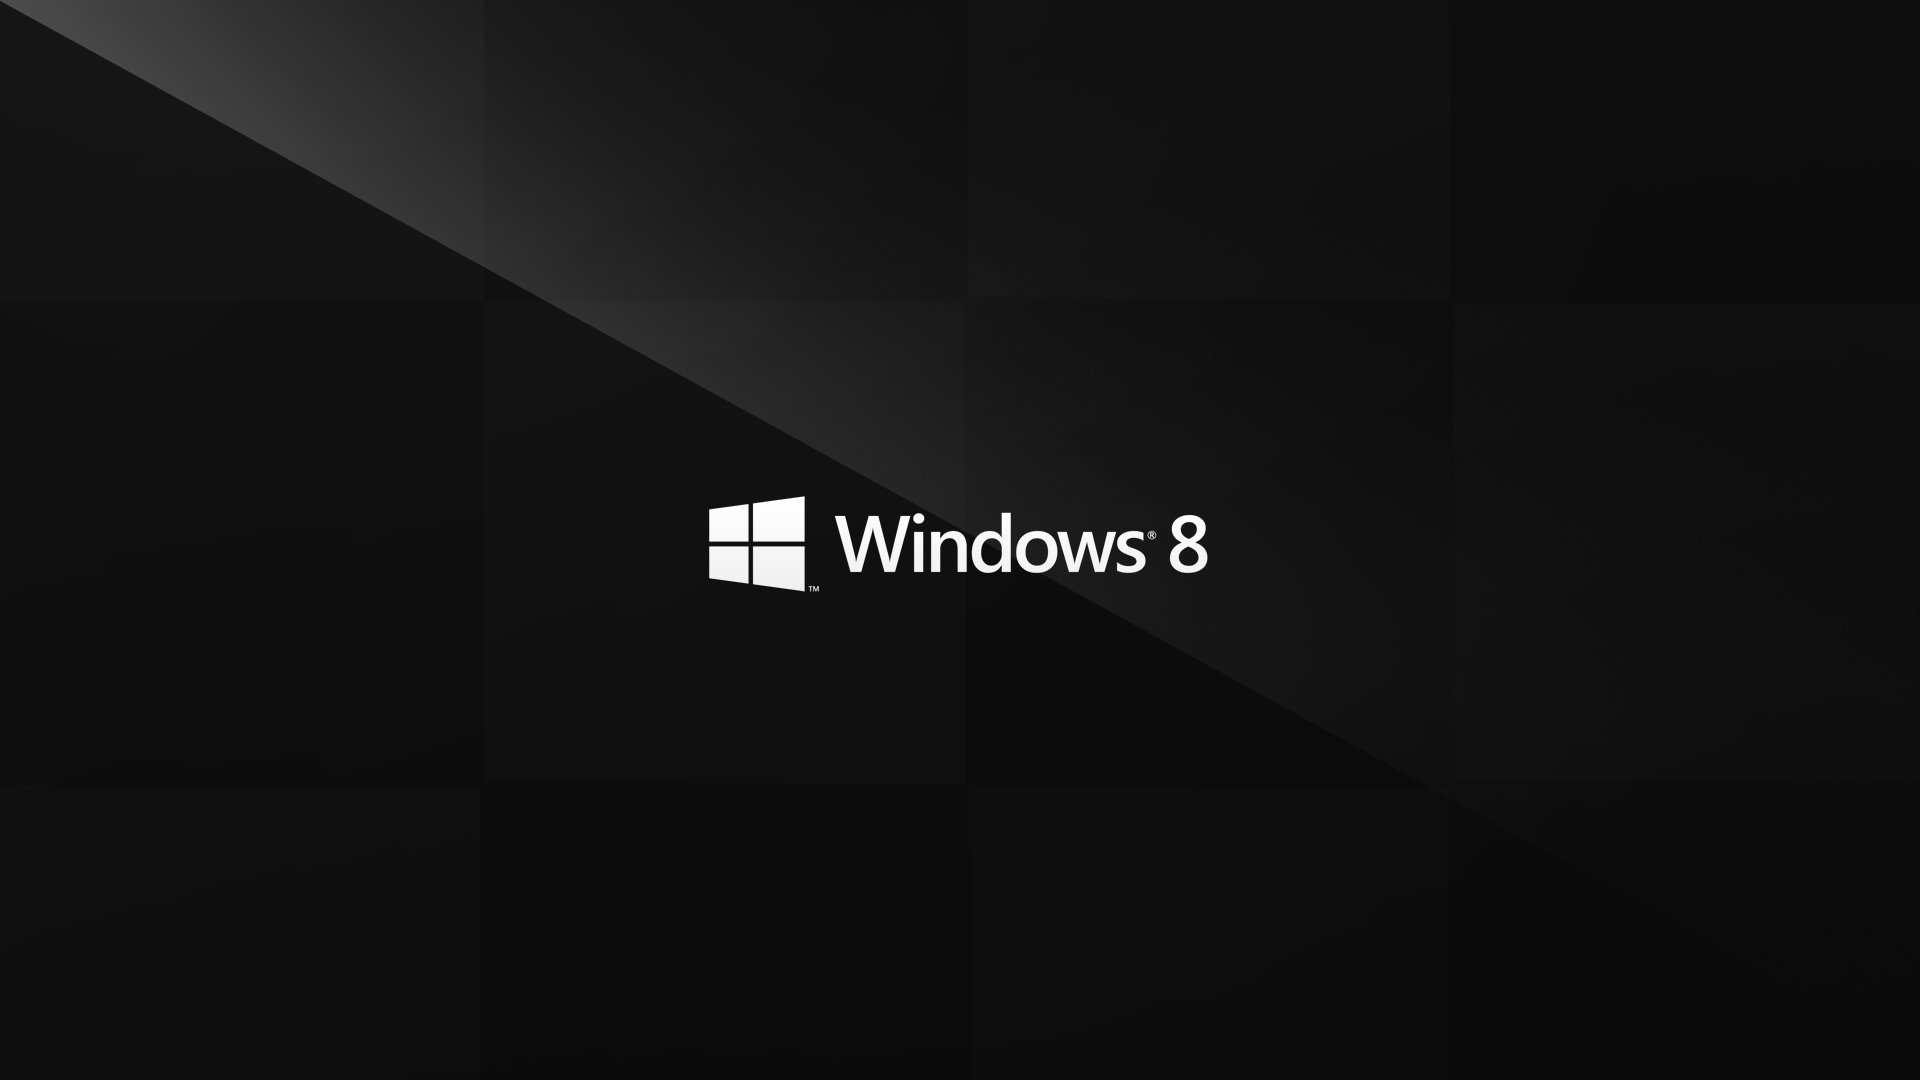 Windows 8 Full HD Wallpaper and Background | 1920x1080 | ID:461339